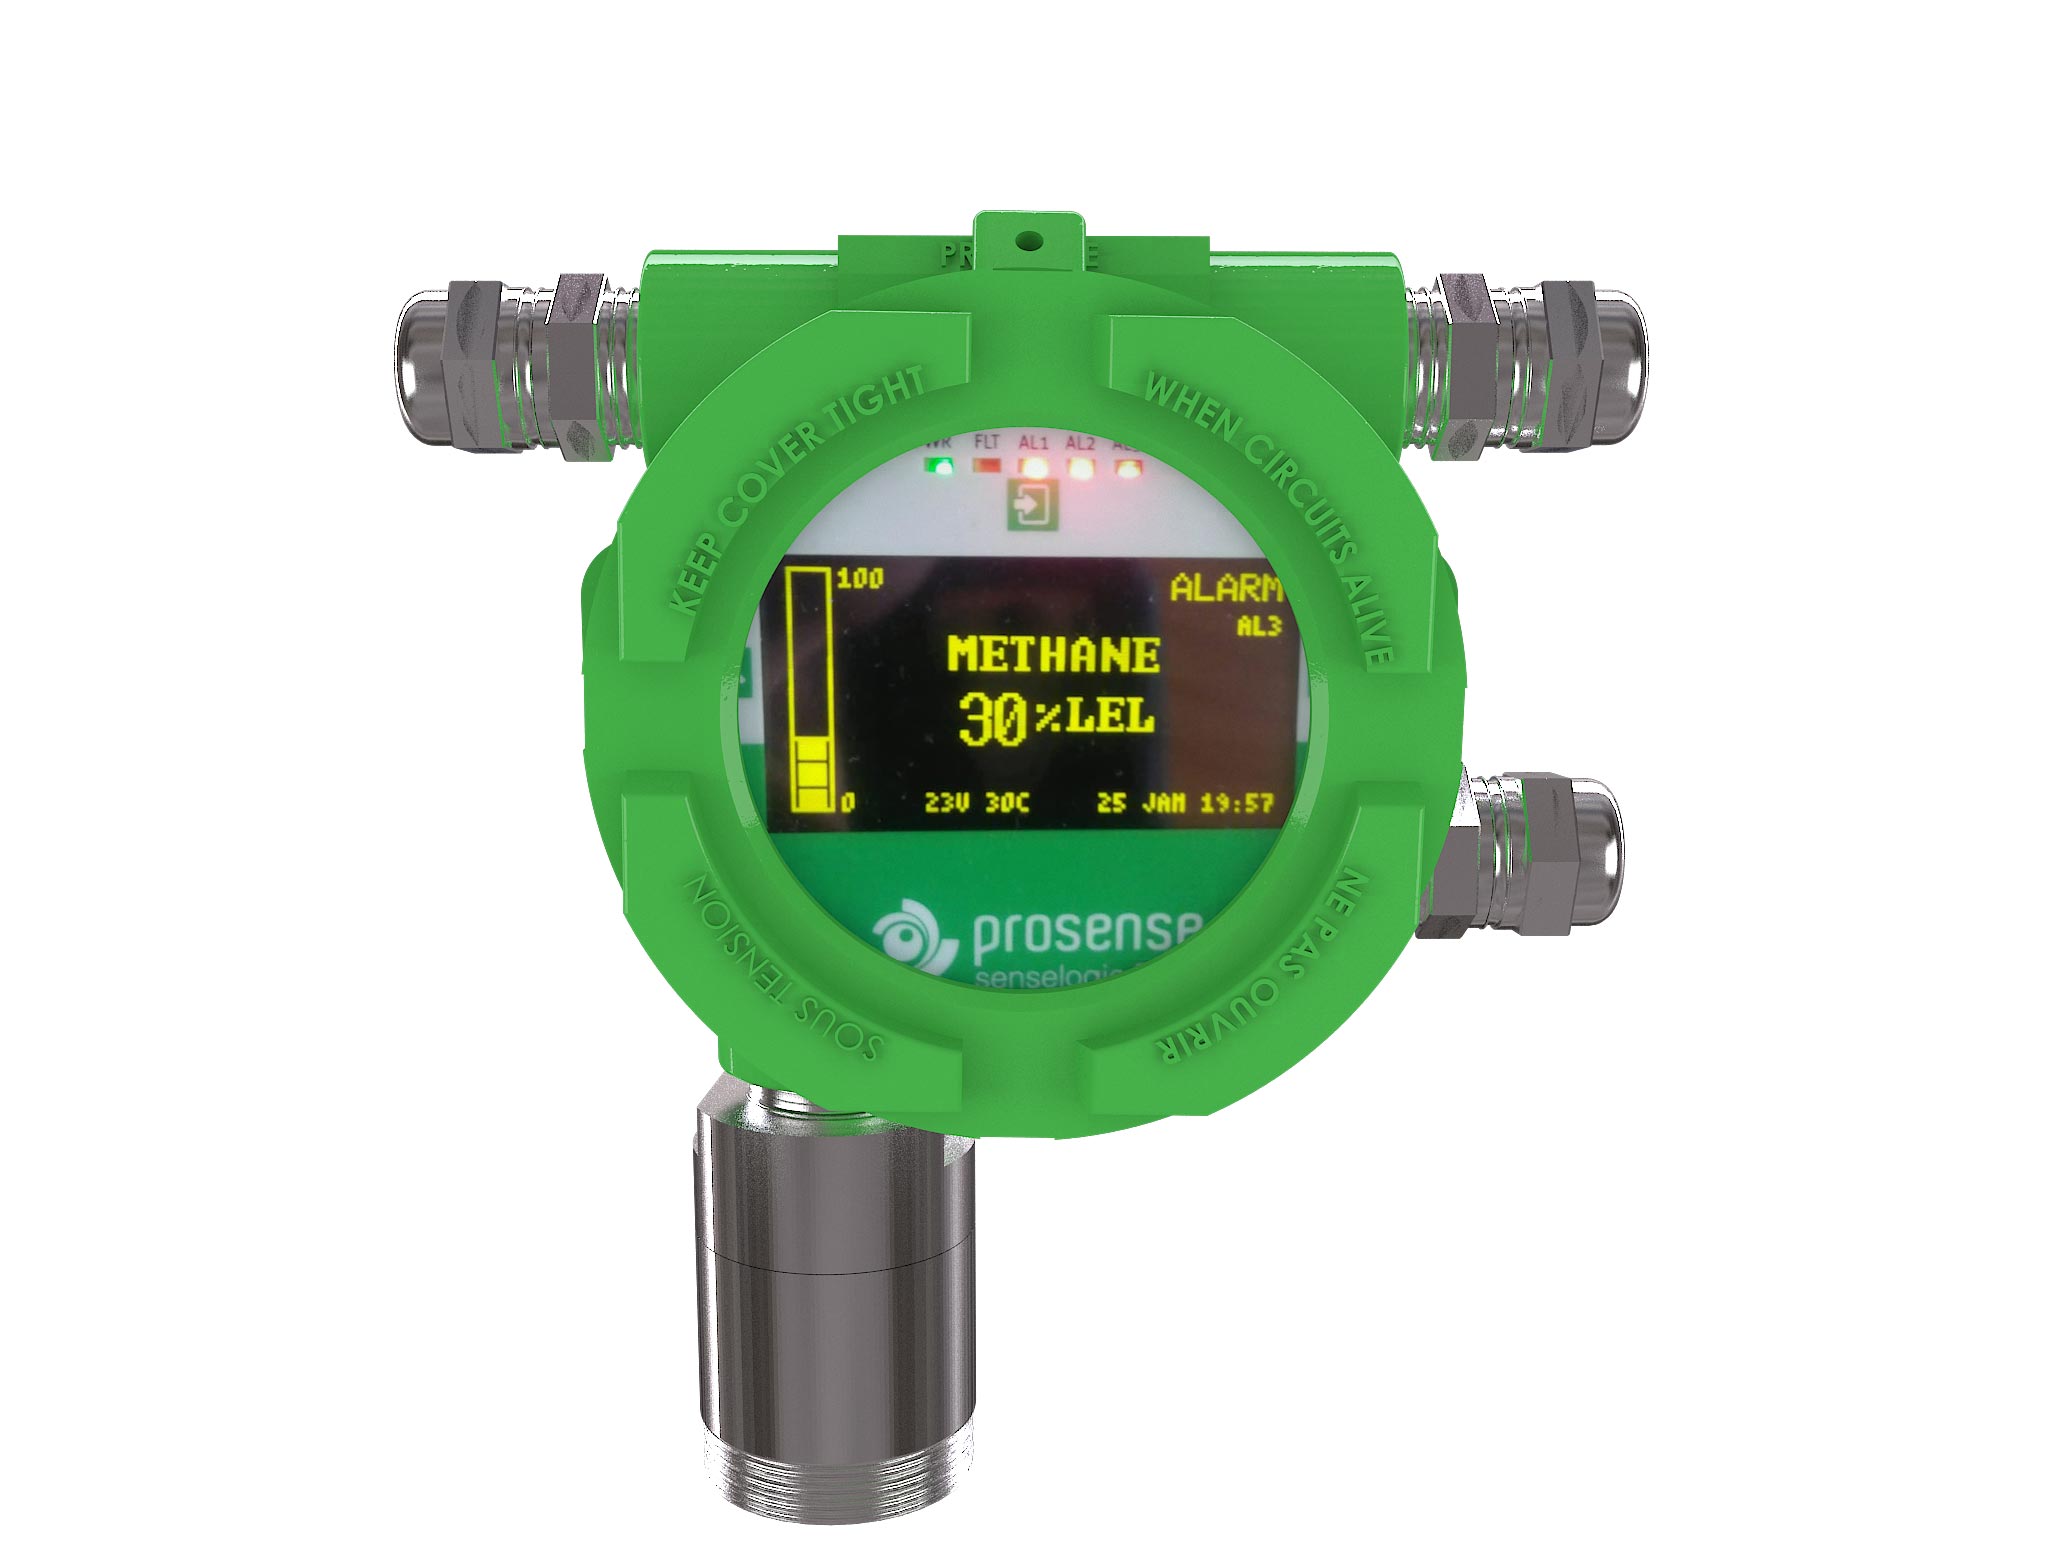 PQD-5735 Styrene Gas Detector